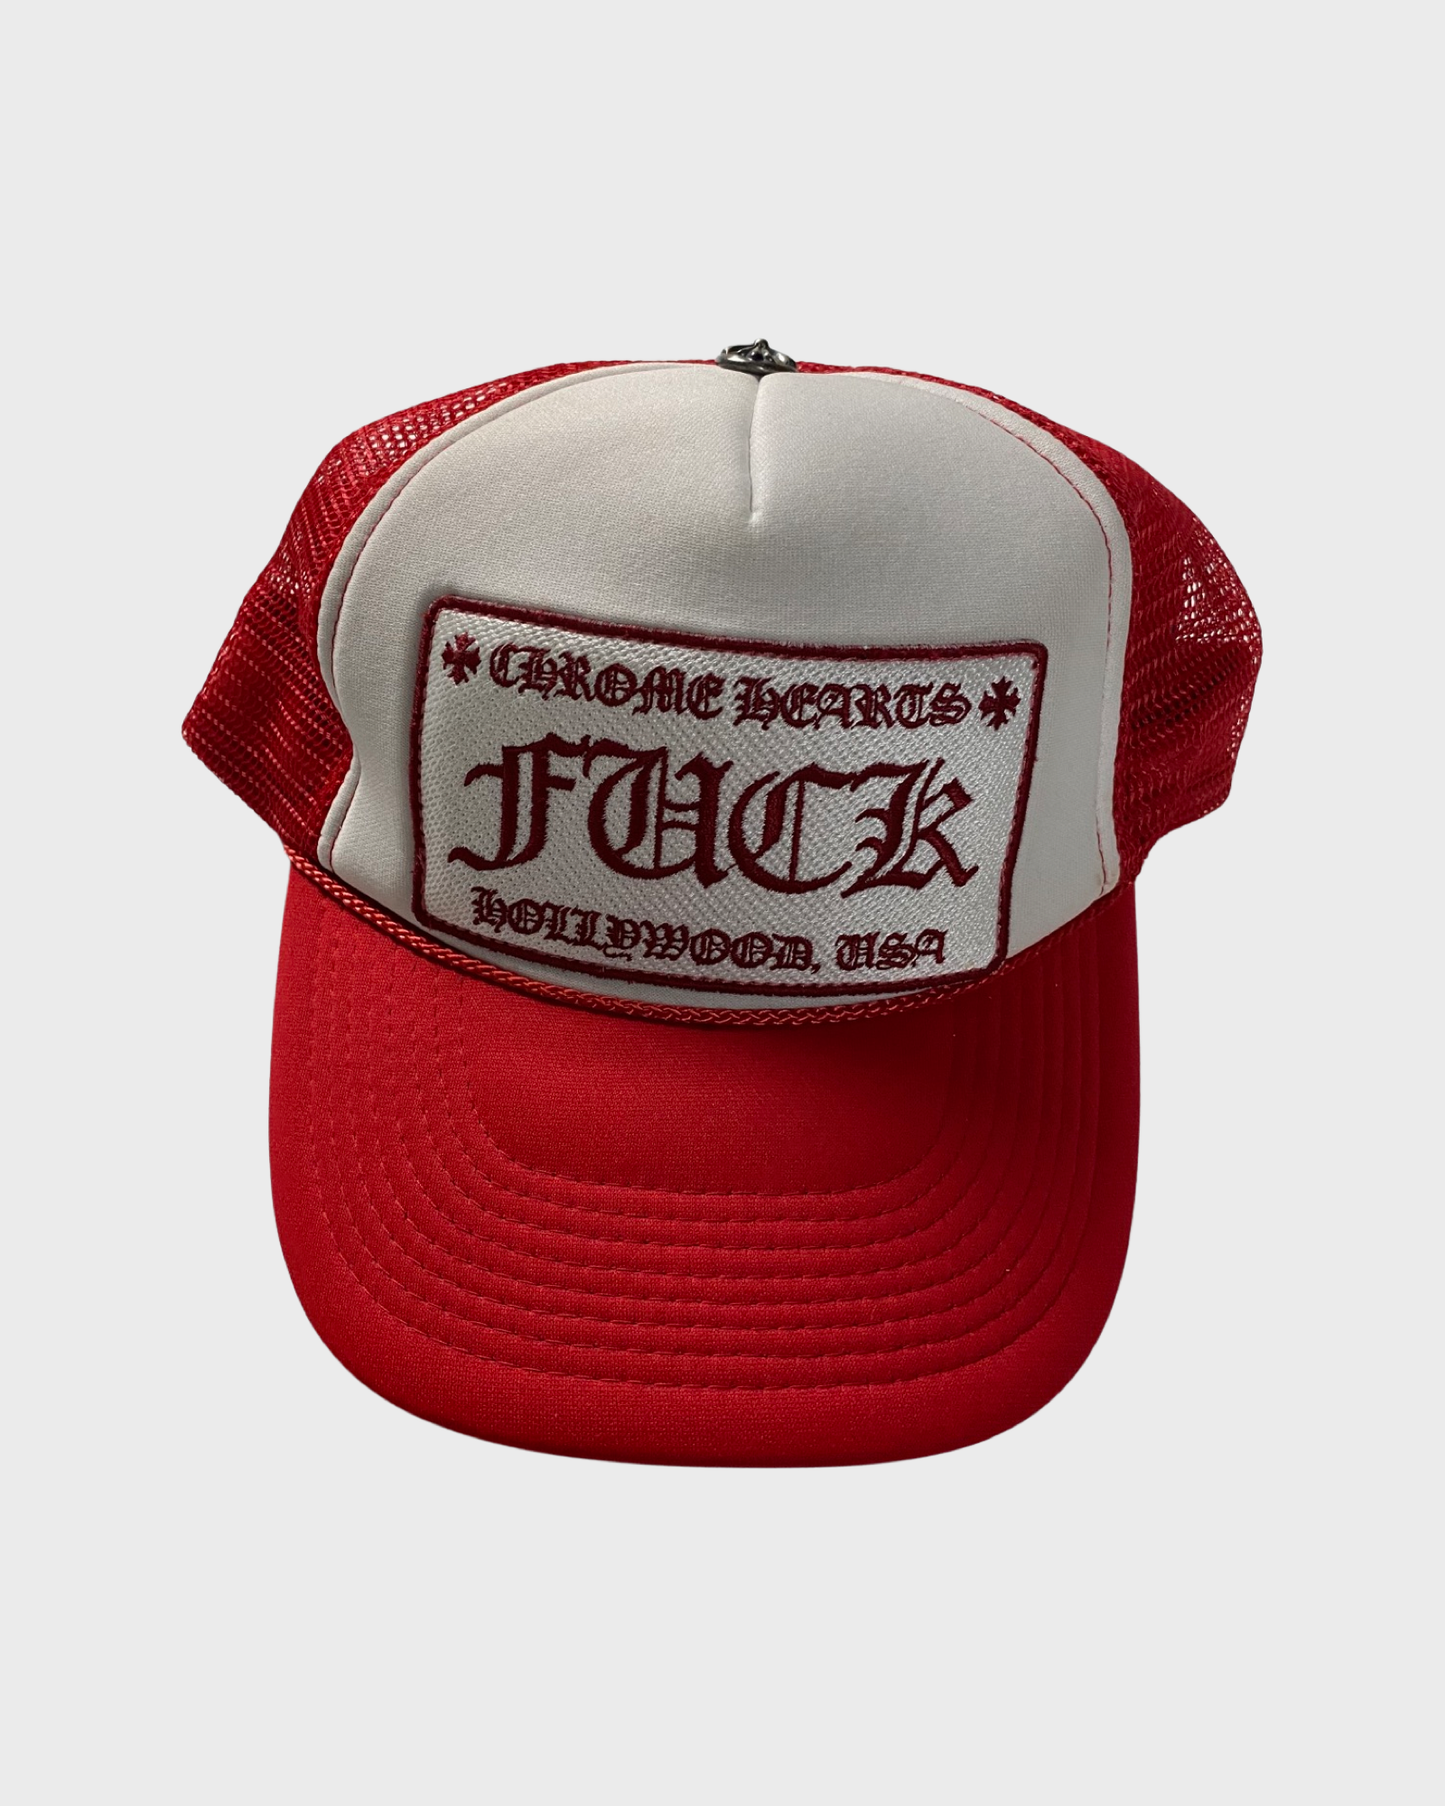 Chrome hearts red FUCK trucker hat / cap SZ:OS